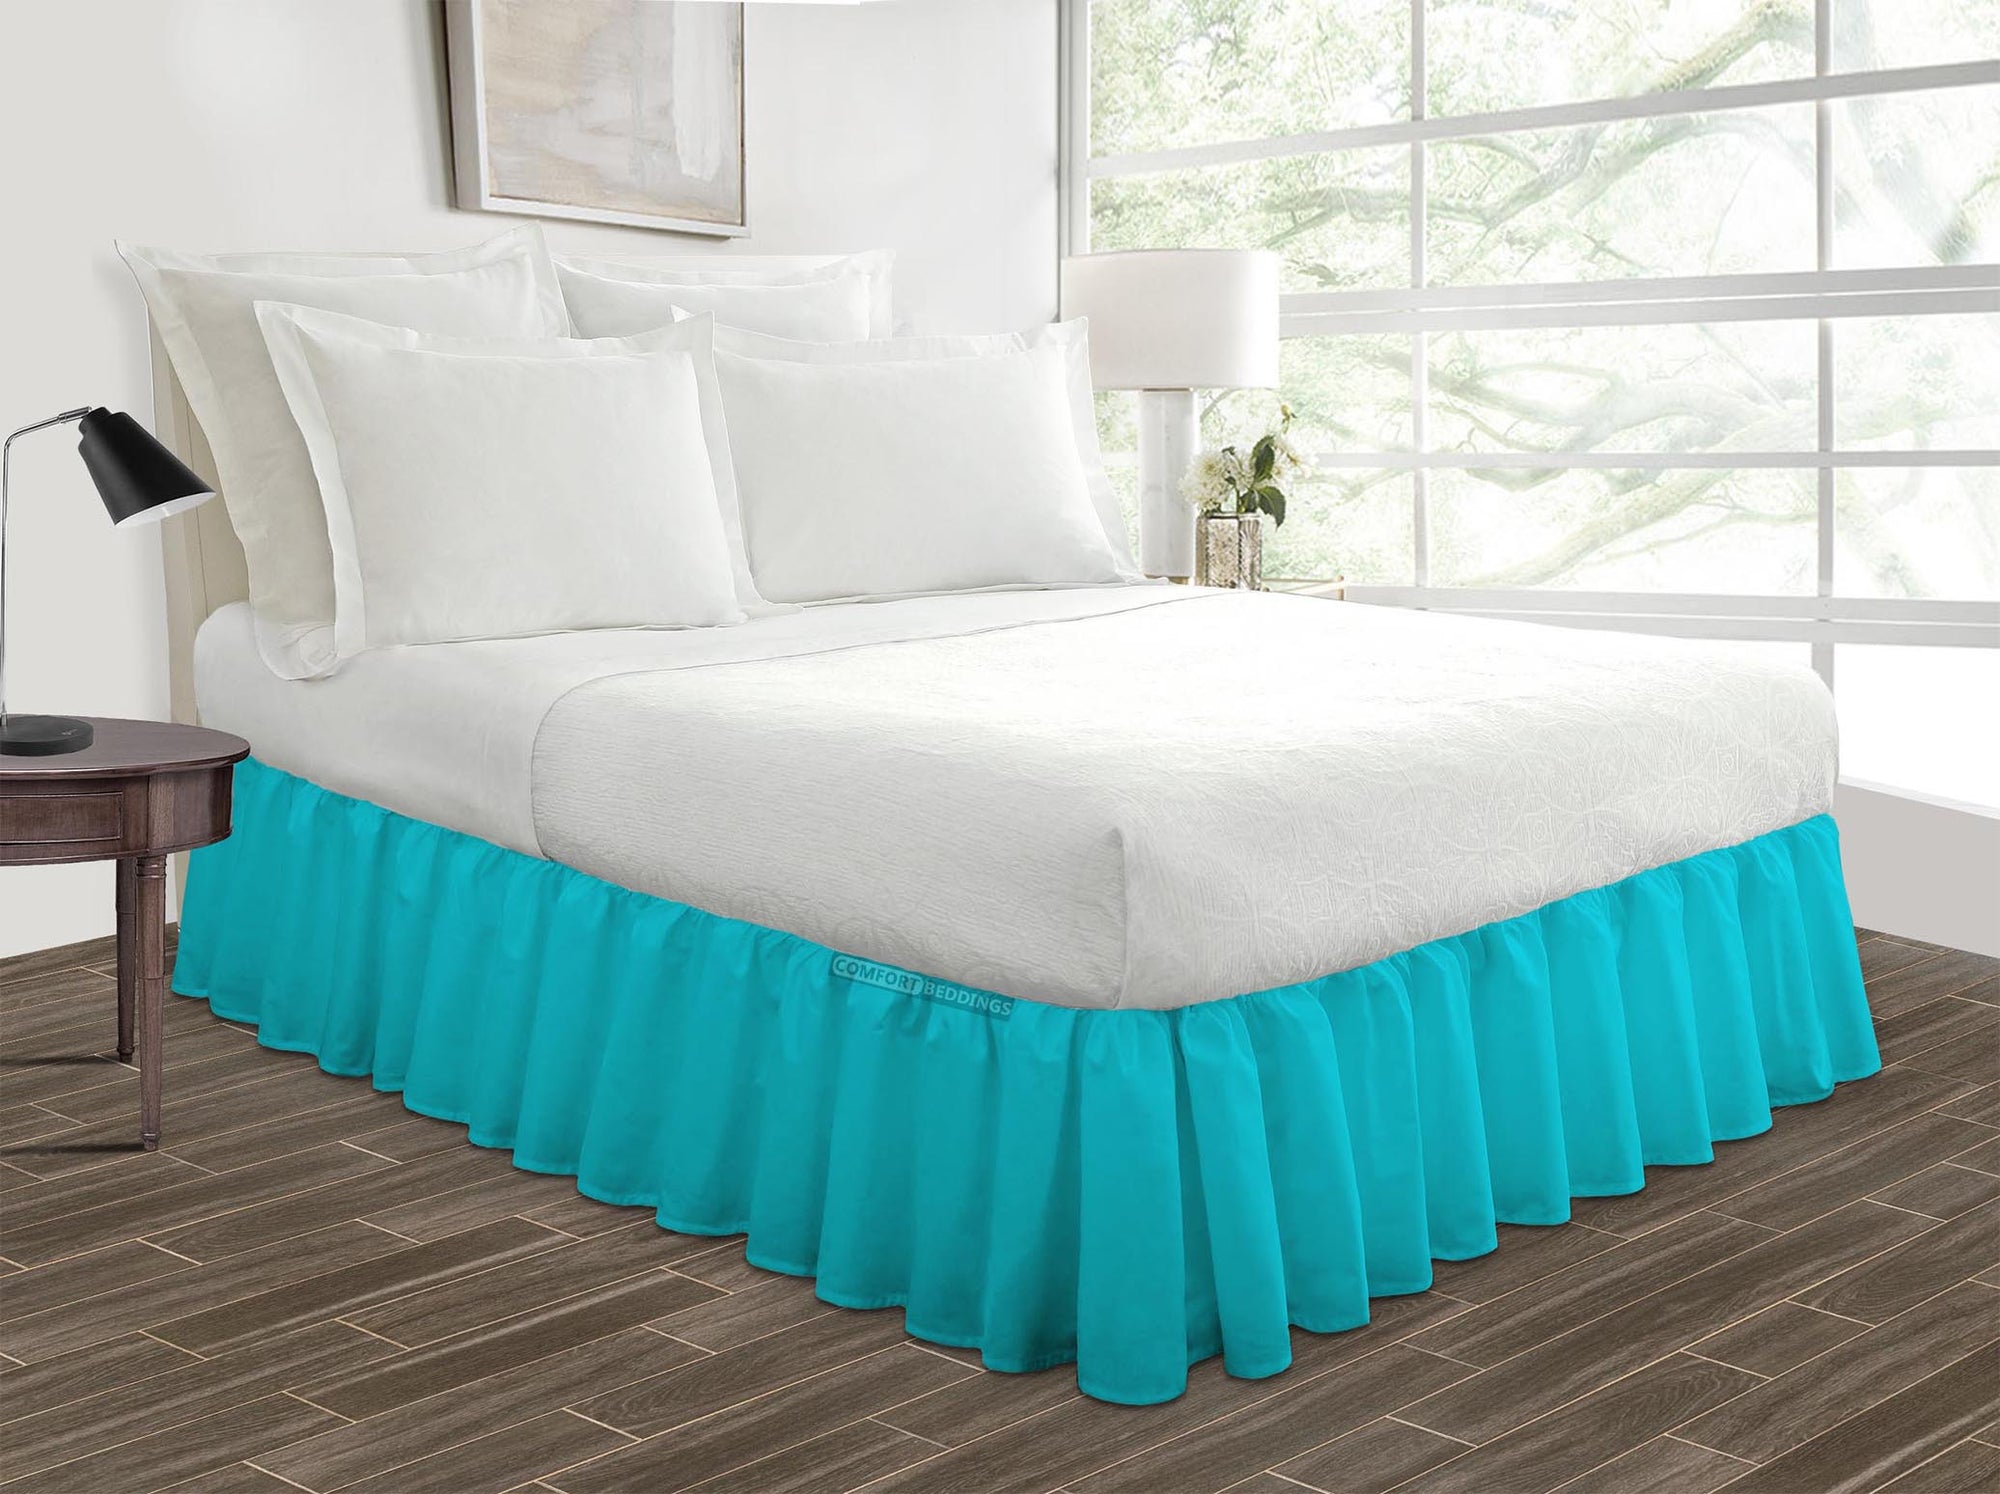 Luxury Turquoise Ruffled Bed Skirt